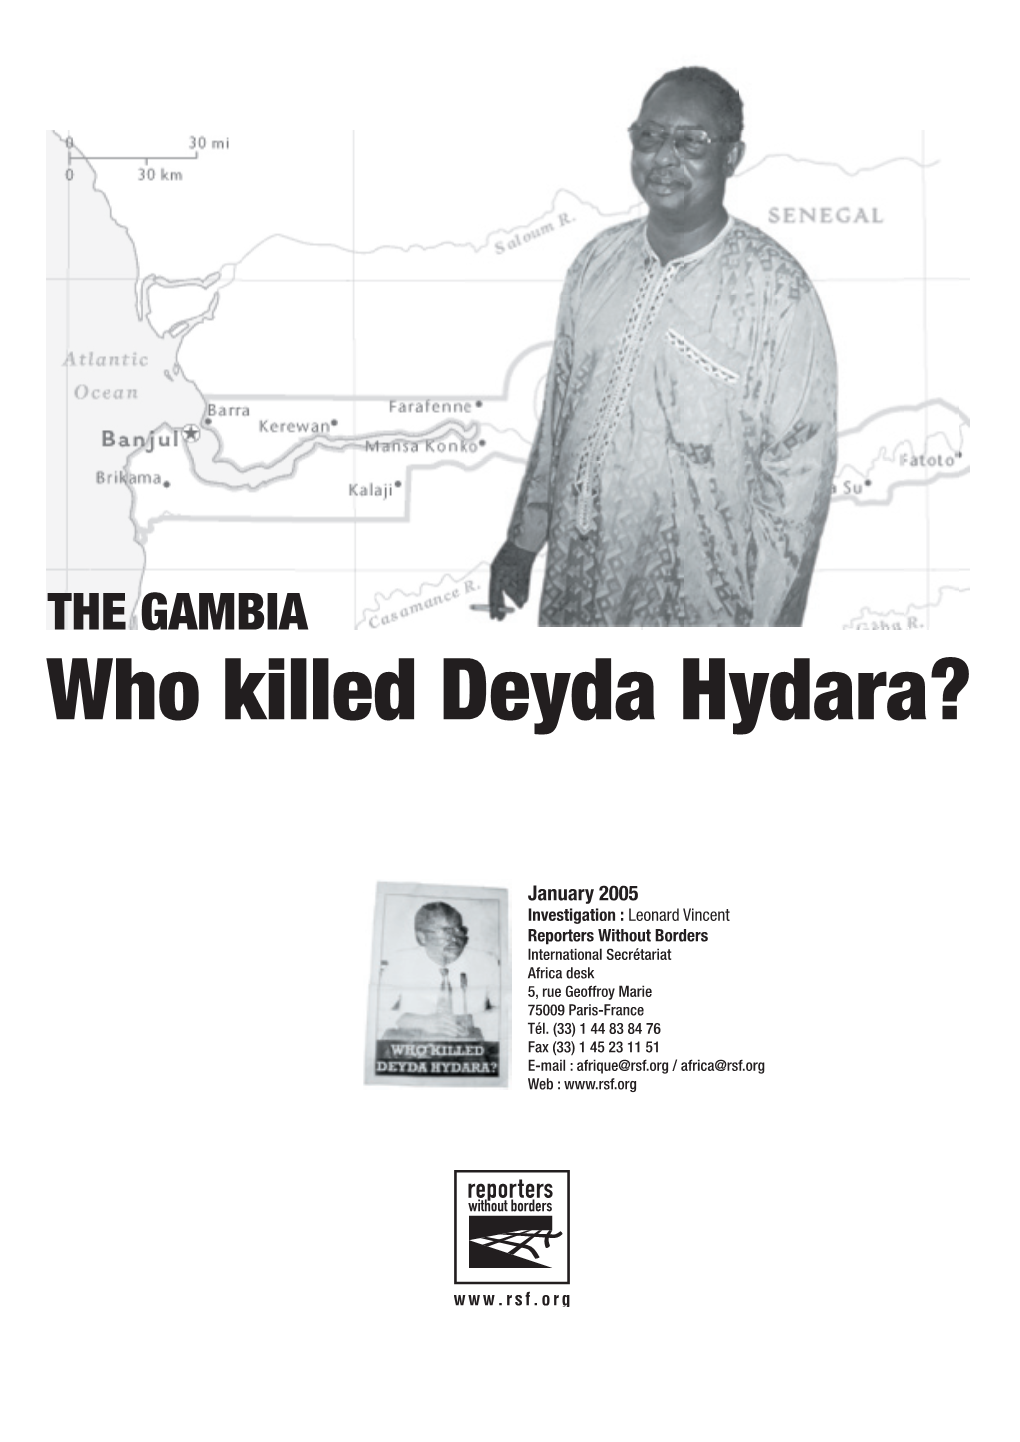 The Gambia: Who Killed Deyda Hydara?